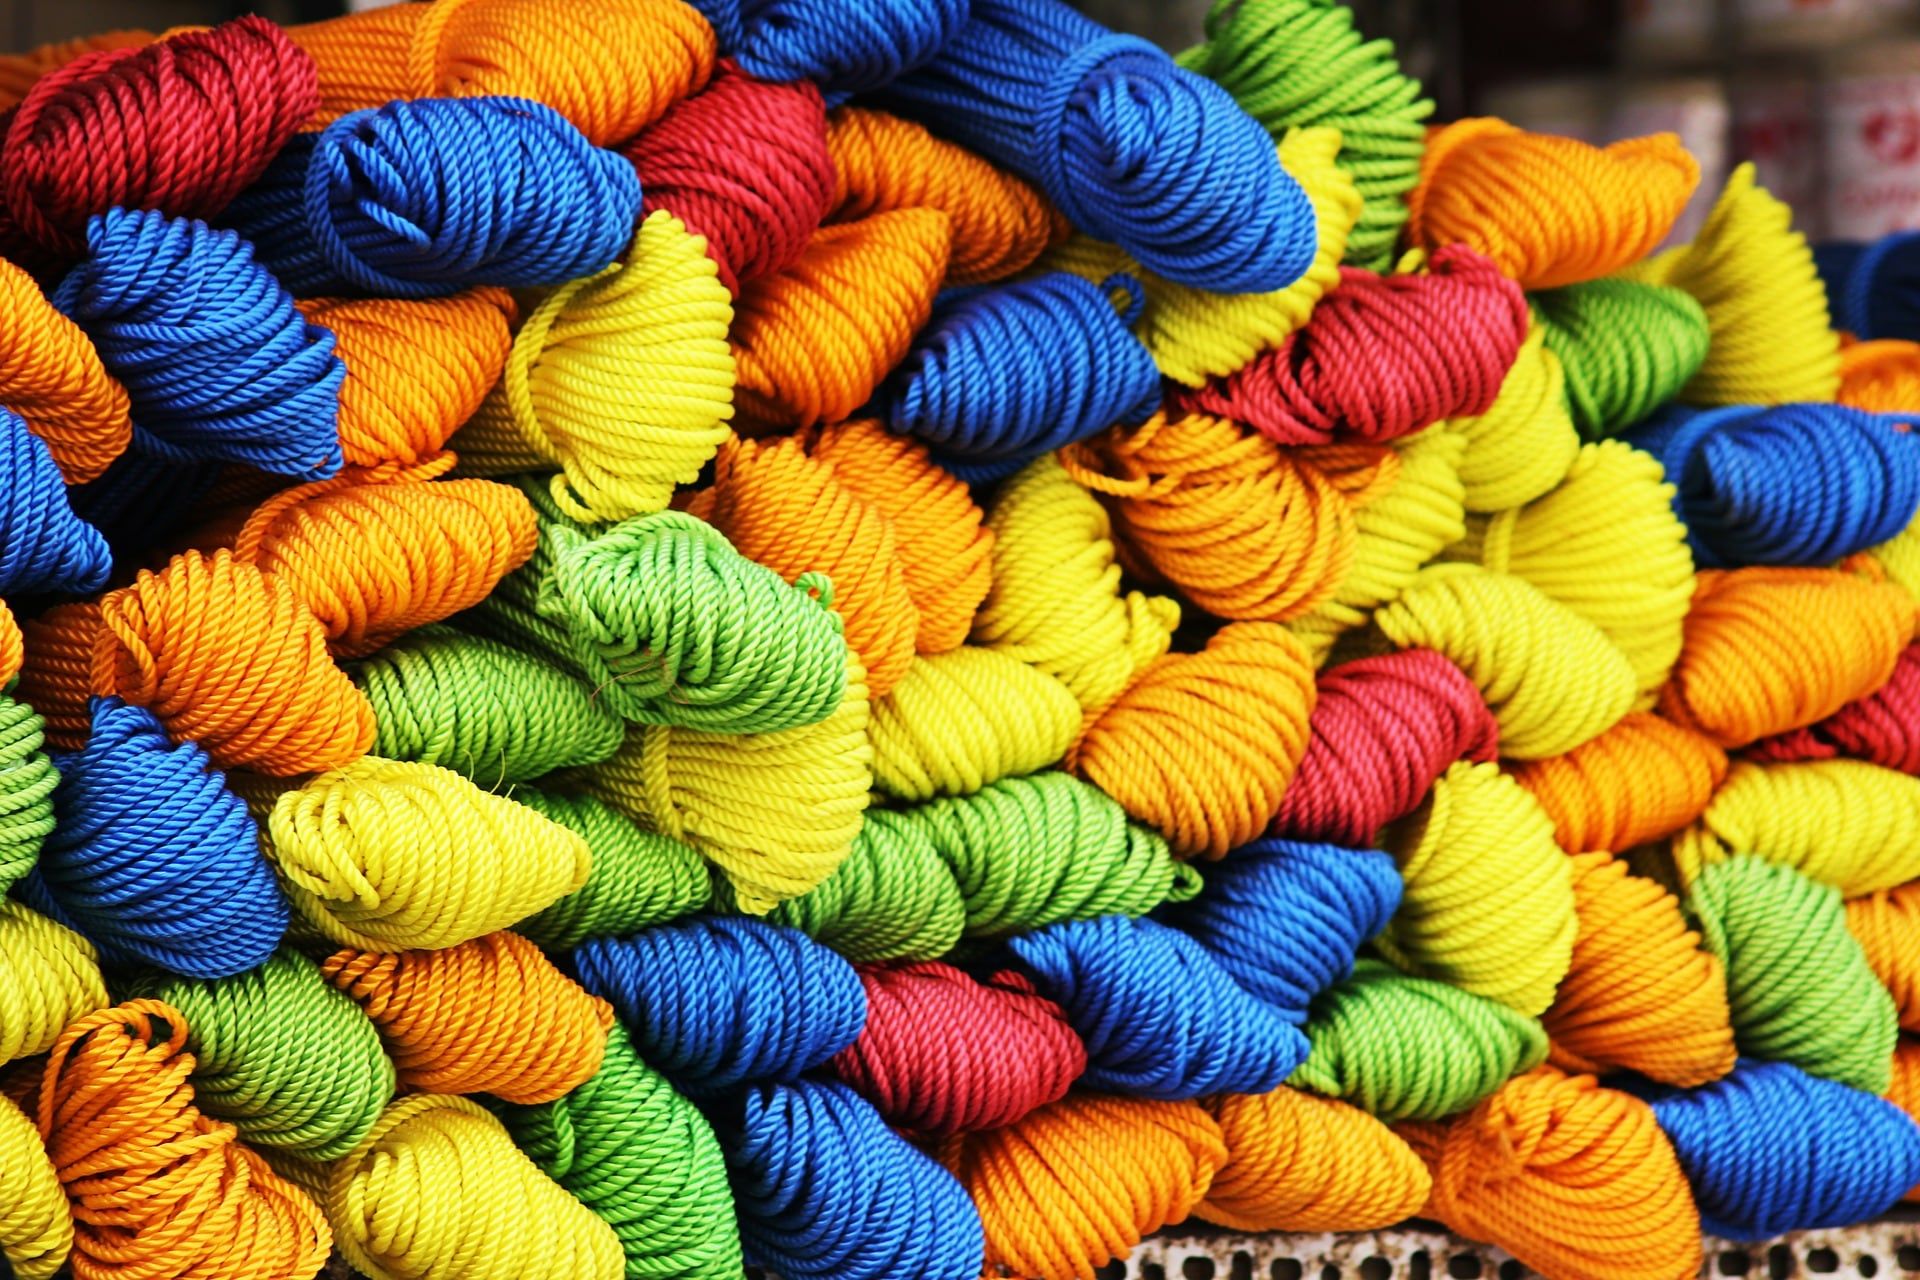 A photo of colourful thread